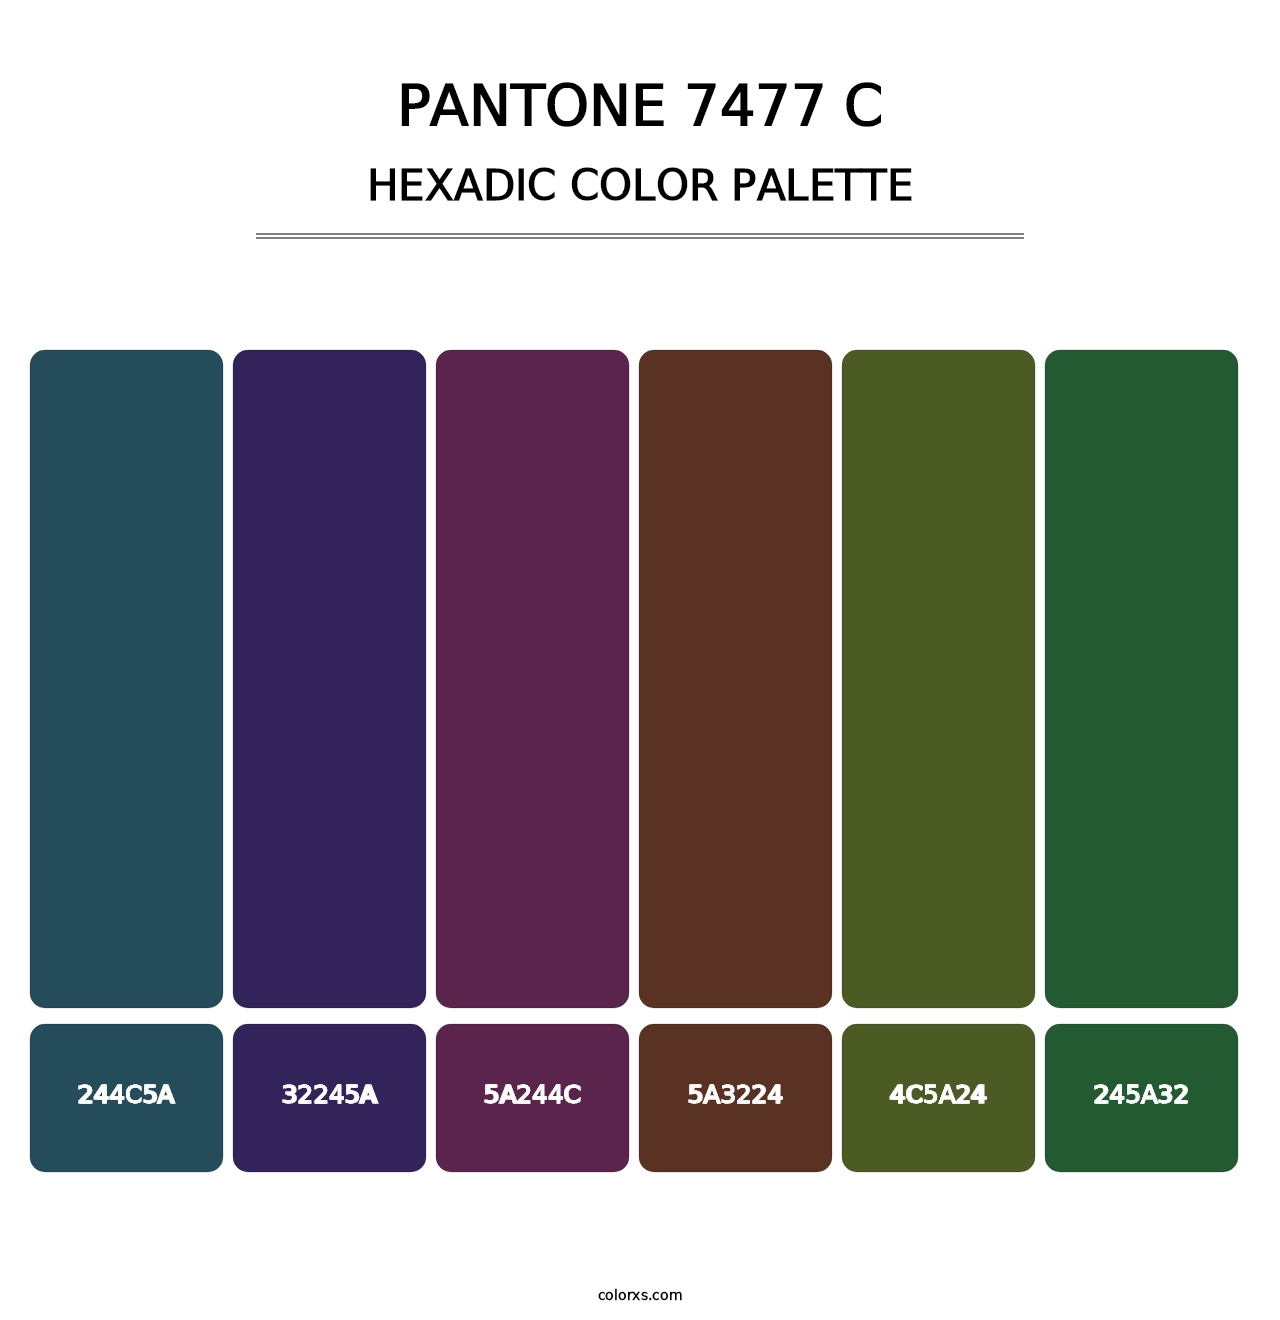 PANTONE 7477 C - Hexadic Color Palette